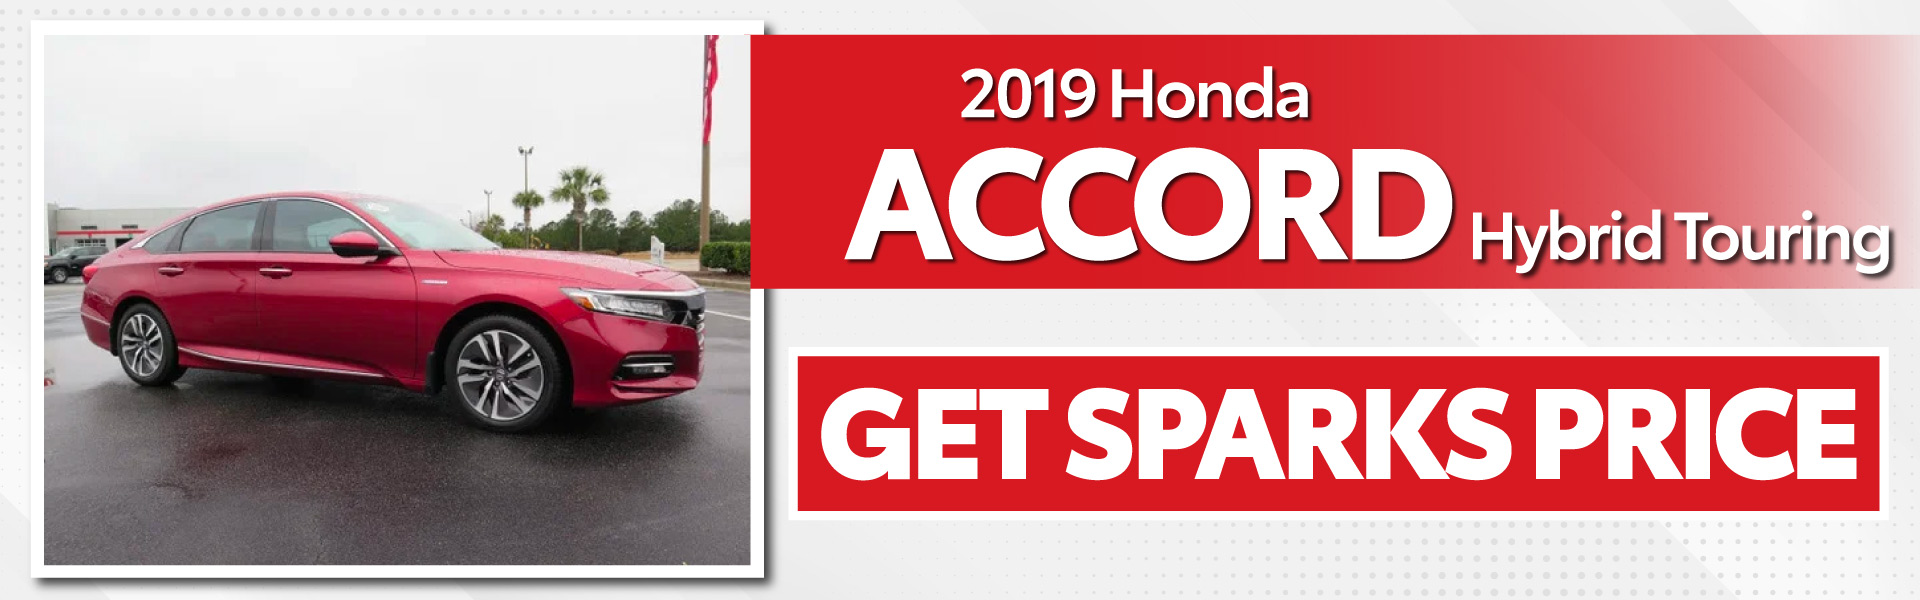 2019 Honda Accord Hybrid Touring - Get Sparks Price